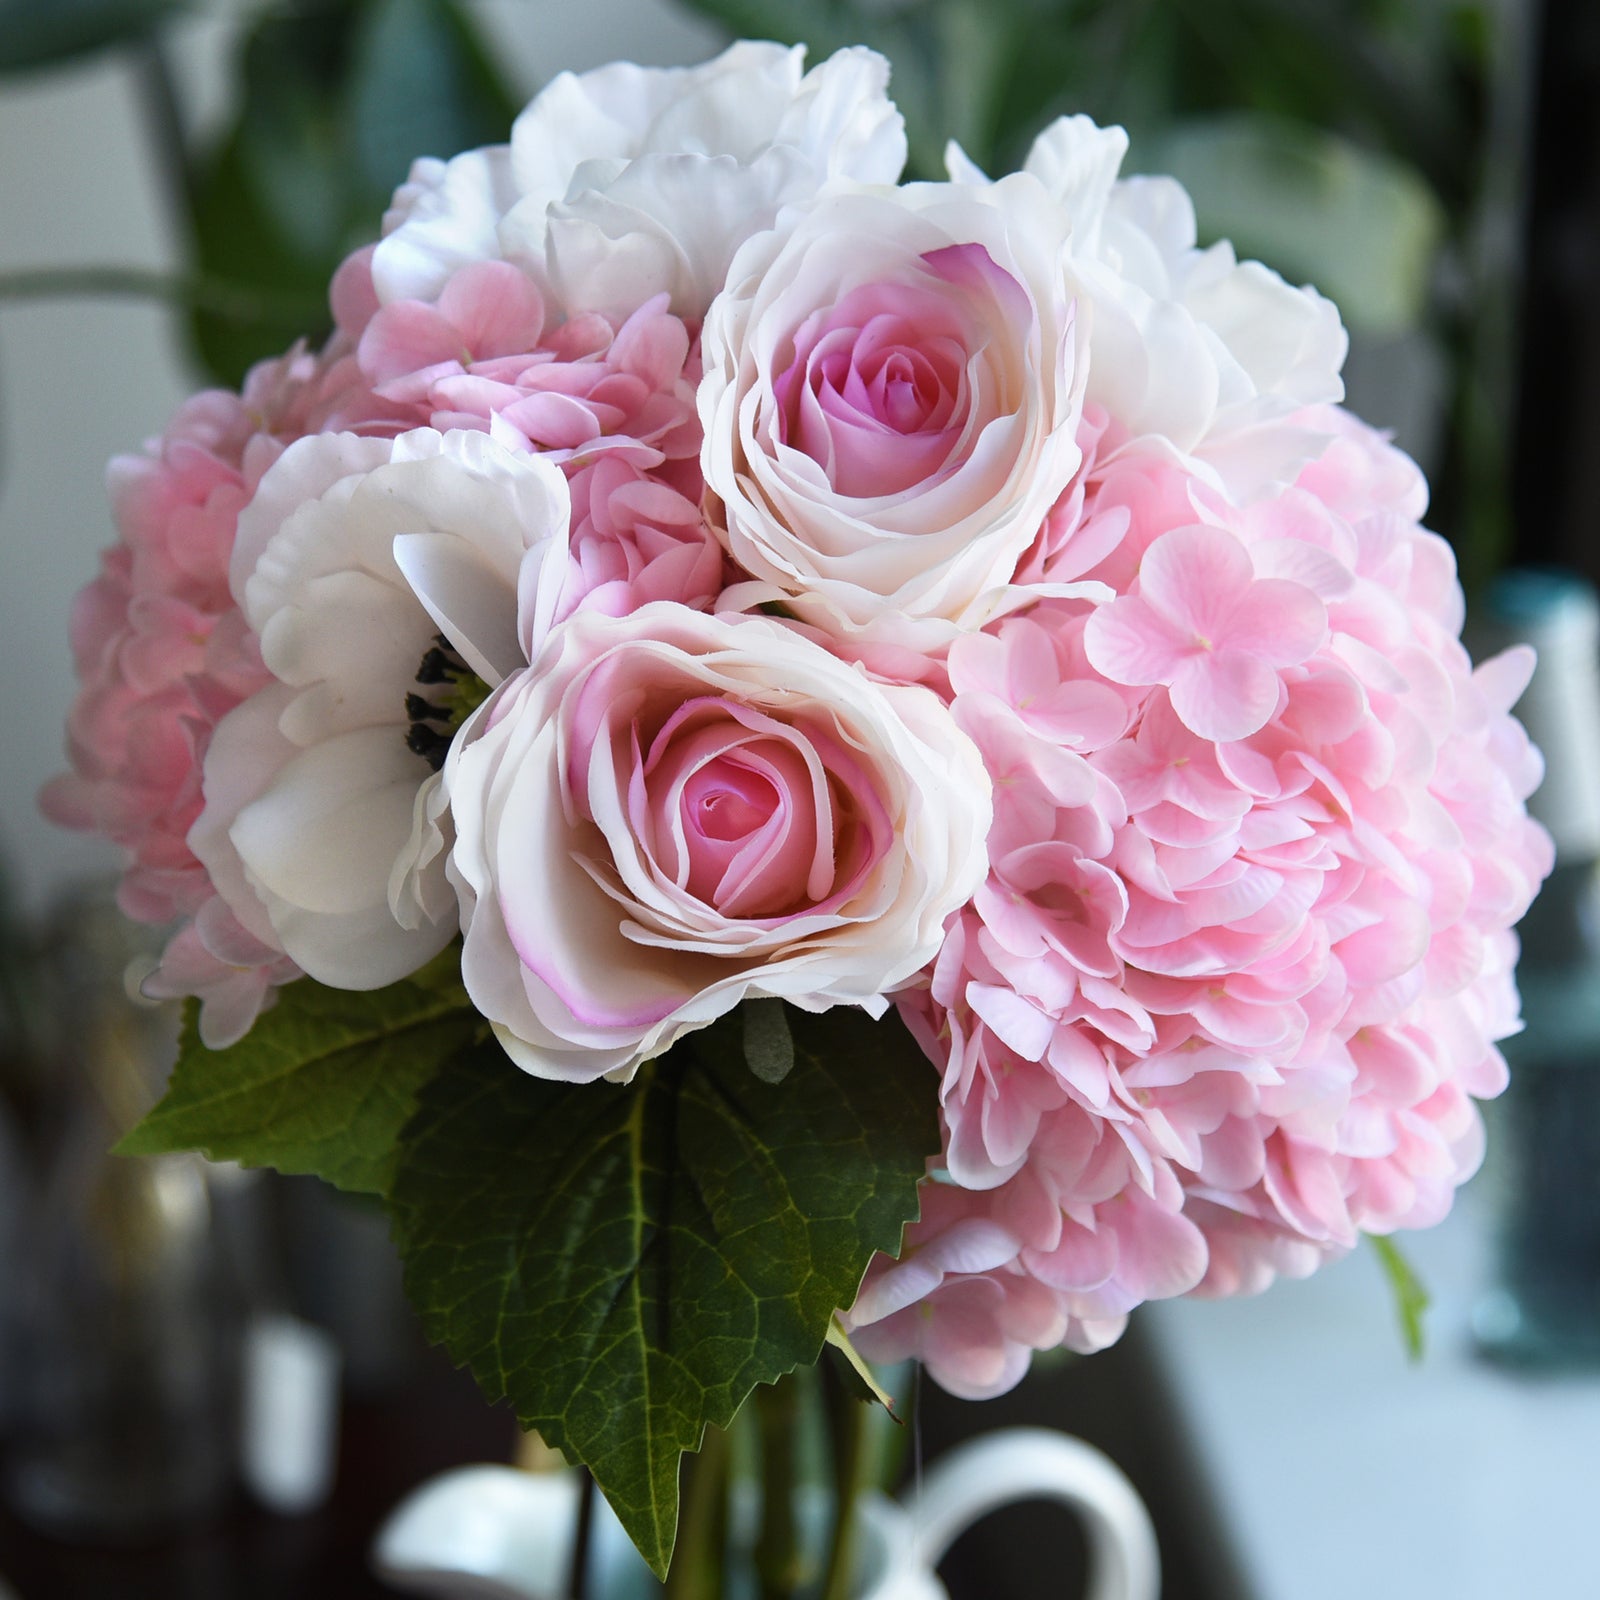 FiveSeasonStuff 2 Stems Real Touch Petals and Leaves Artificial Hydrangea Flowers Long Stem Floral Arrangement (Mixed Pink)